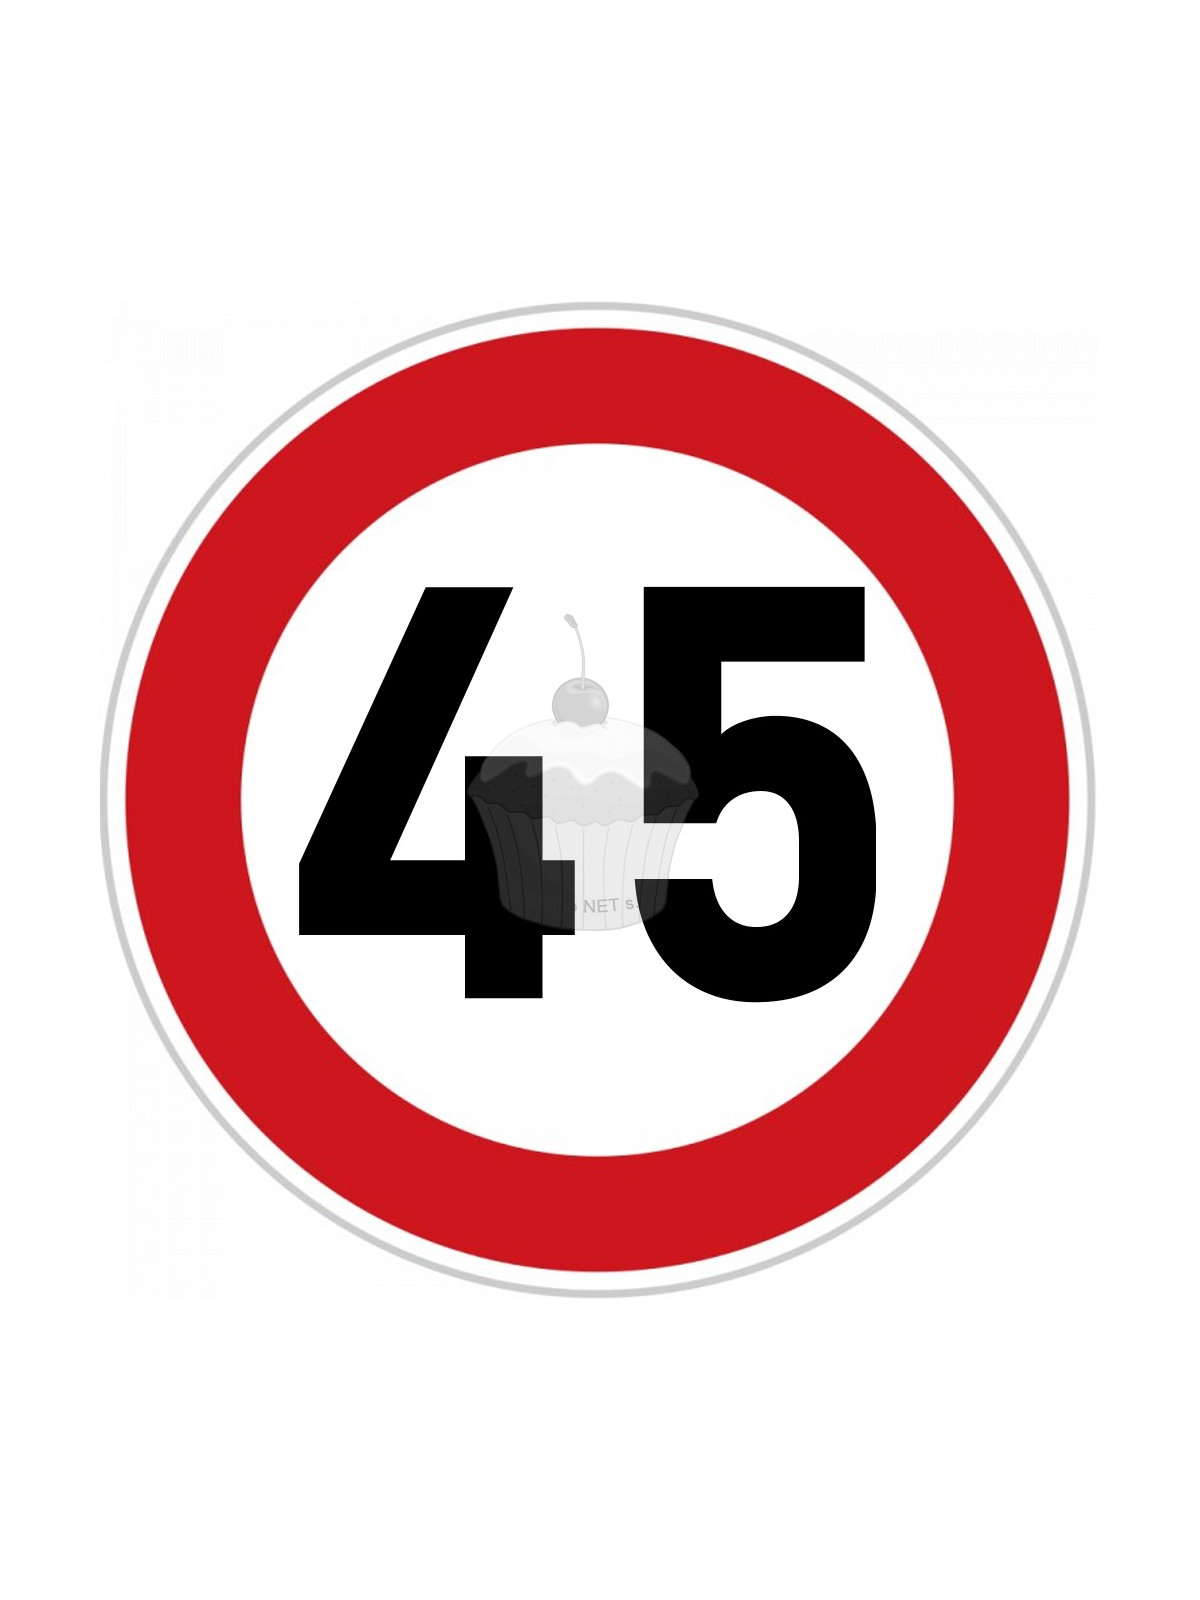 Edible paper "45th Birthday" ban sign A4